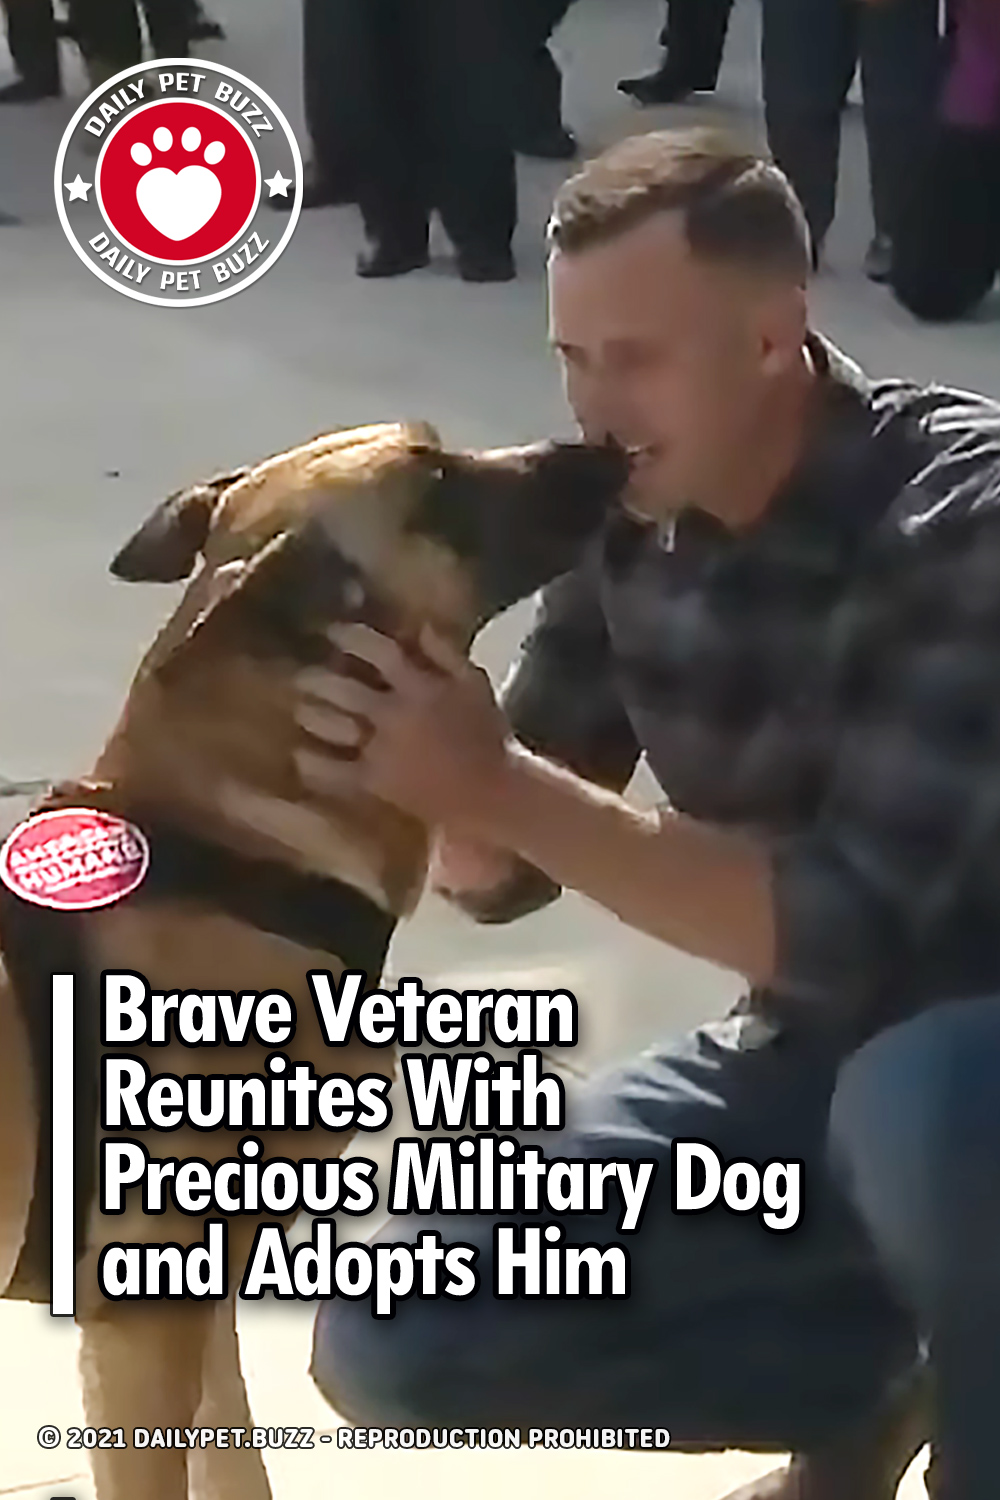 Brave Veteran Reunites With Precious Military Dog and Adopts Him